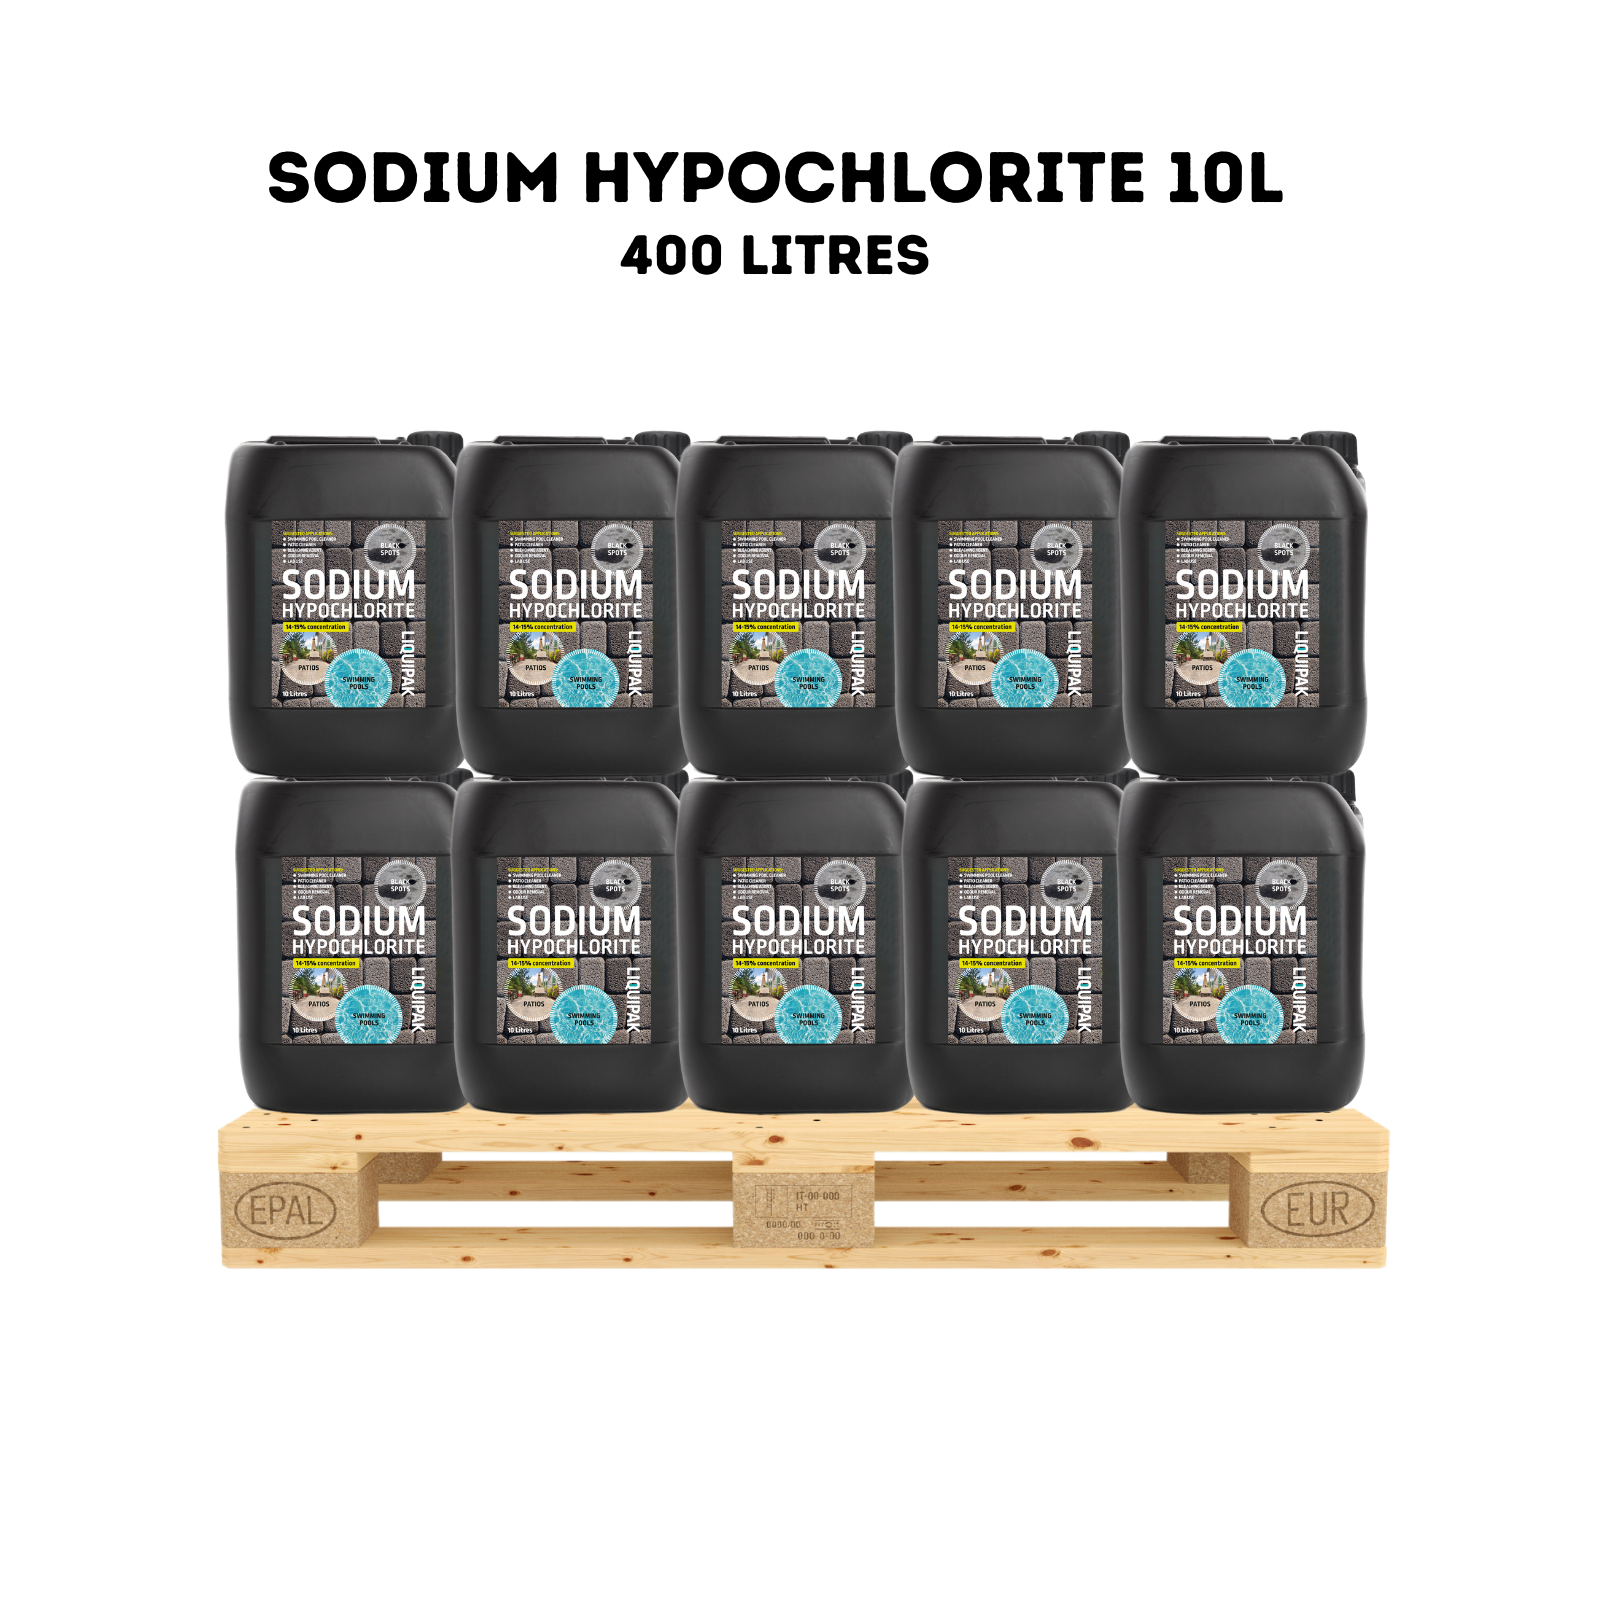 Sodium Hypochlorite 400 Litres